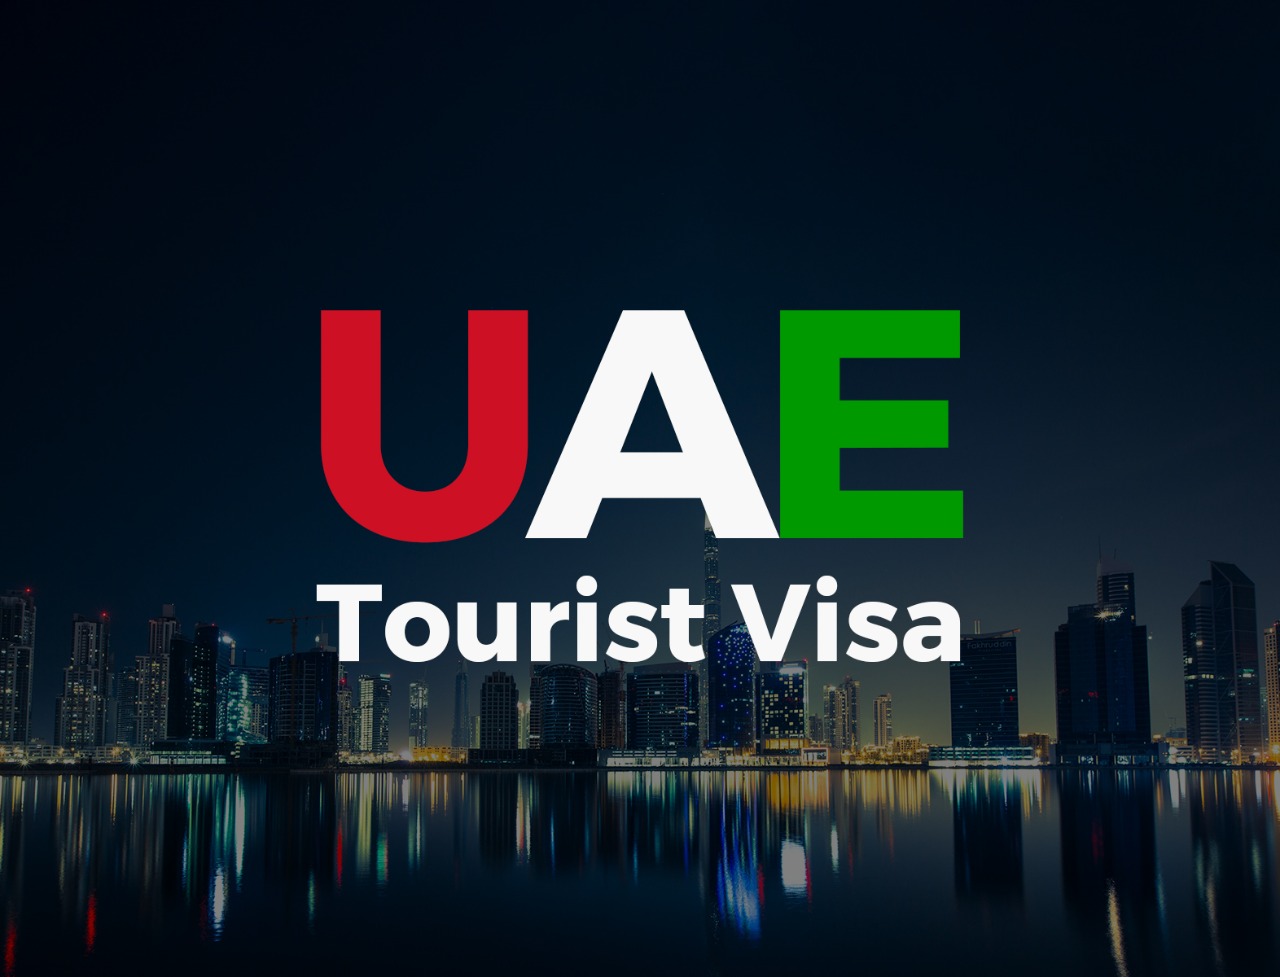 The lowest rates for UAE tourist visas.